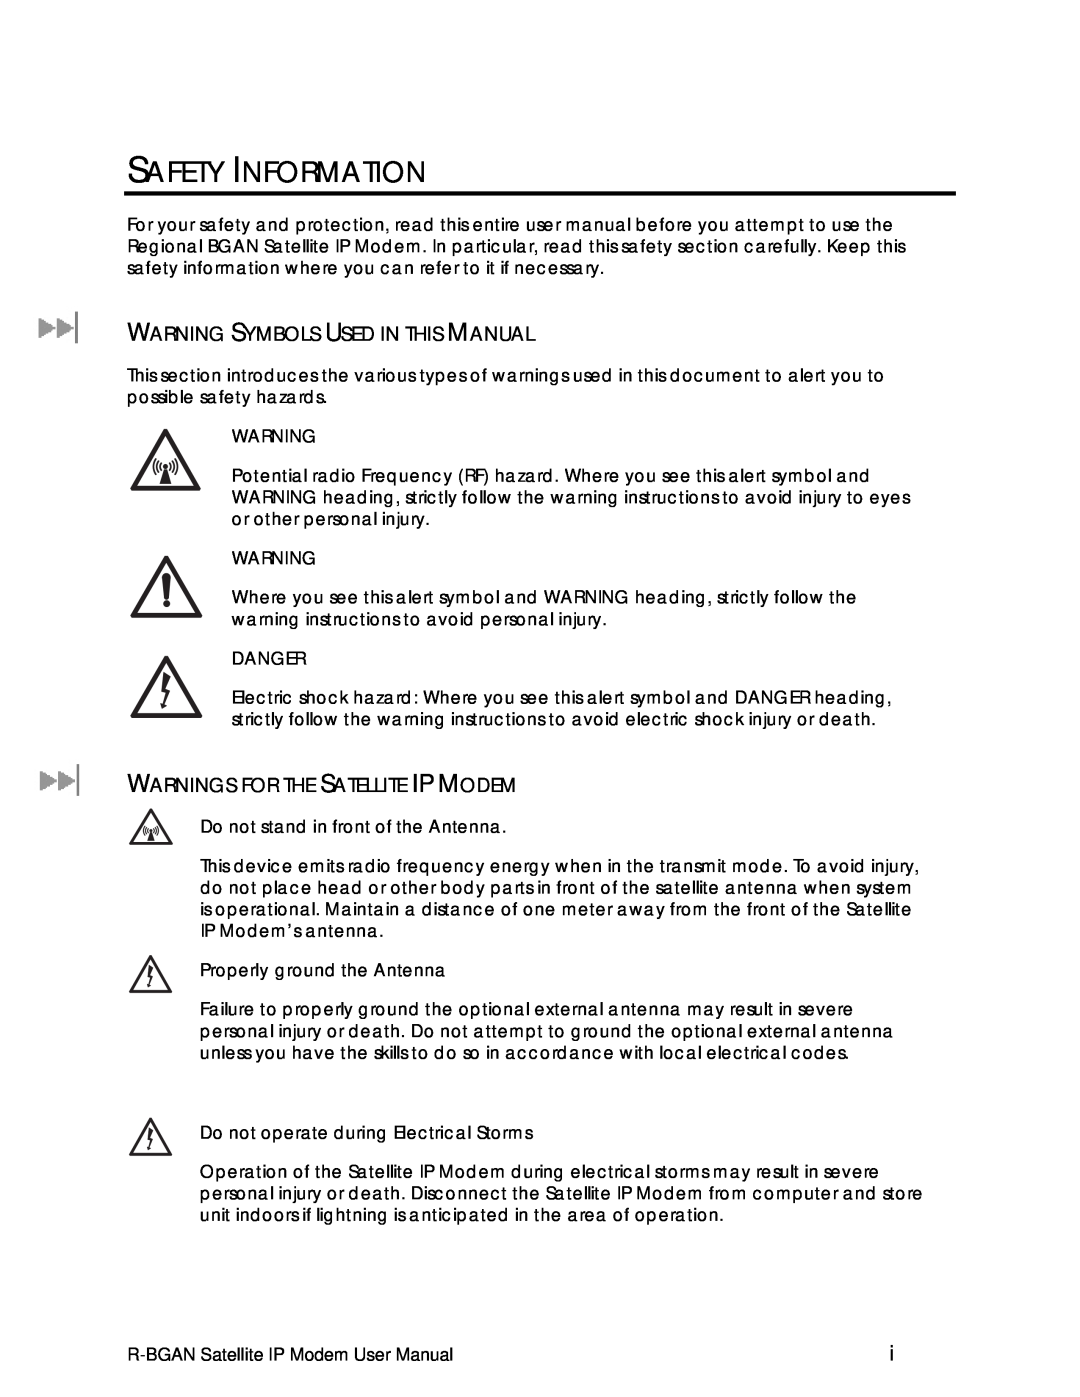 Hughes R-BGAN manual Safety Information, Warning Symbols Used In This Manual, Warnings For The Satellite Ip Modem, Danger 